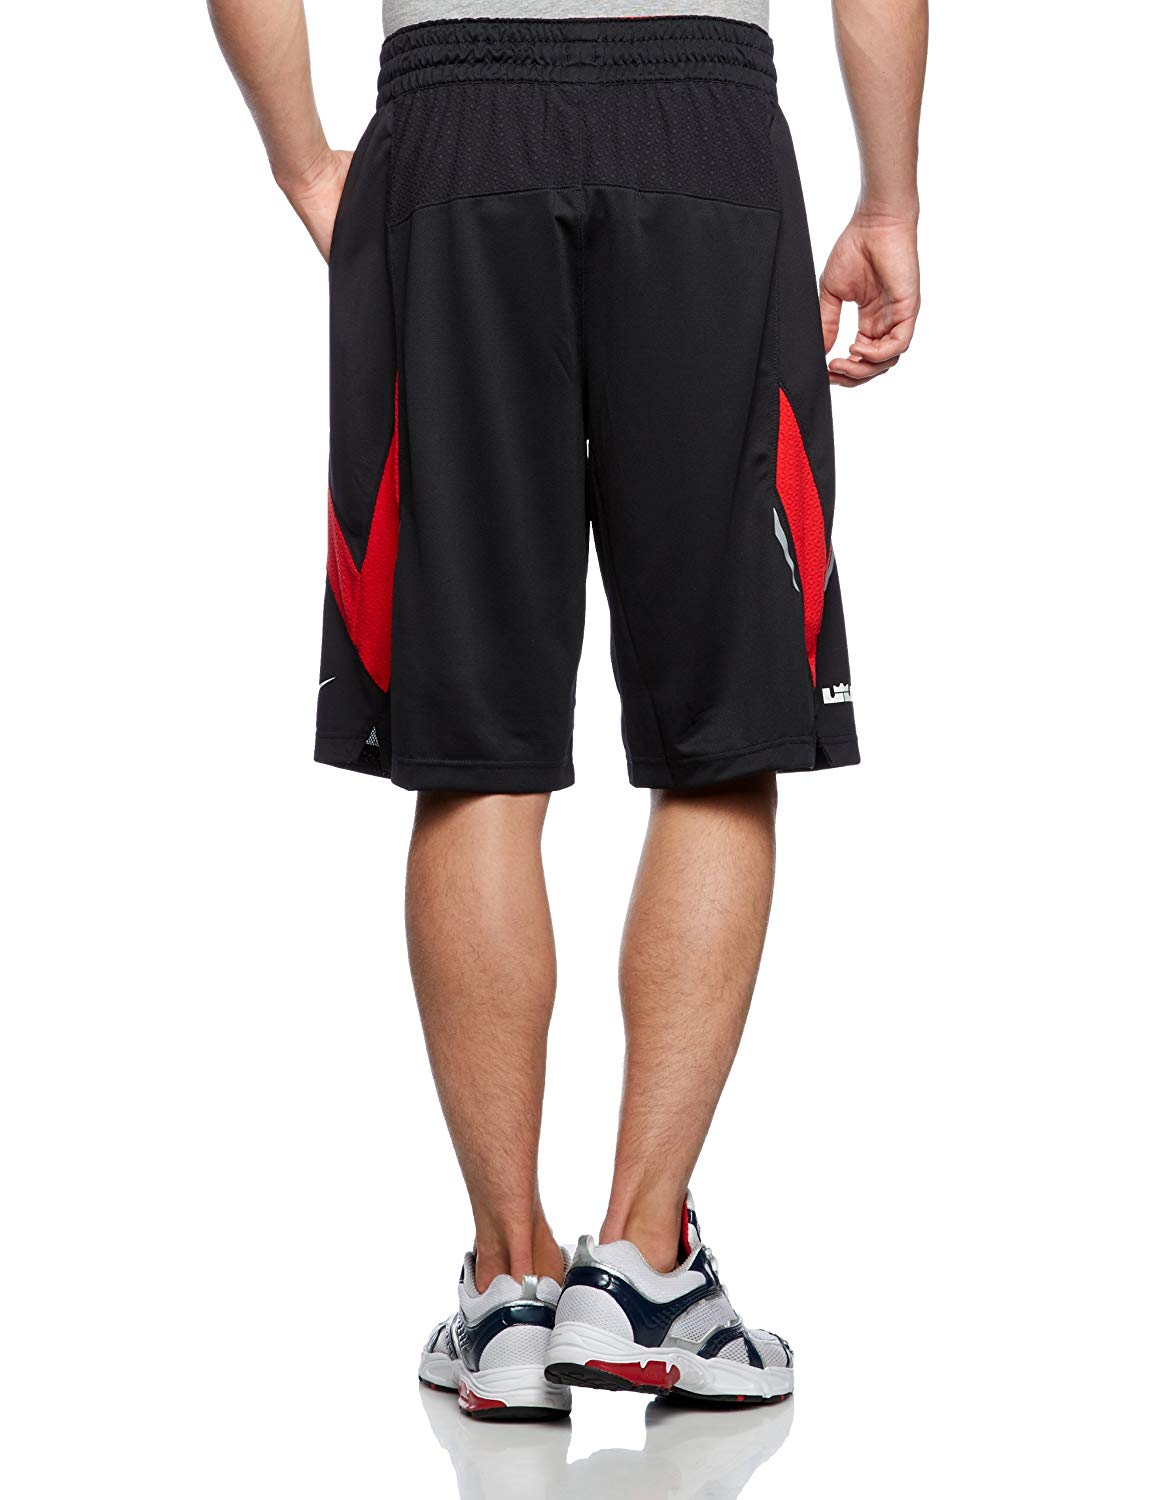 Nike Mens Lebron Outdoor Tech Basketball Shorts - image 2 of 2